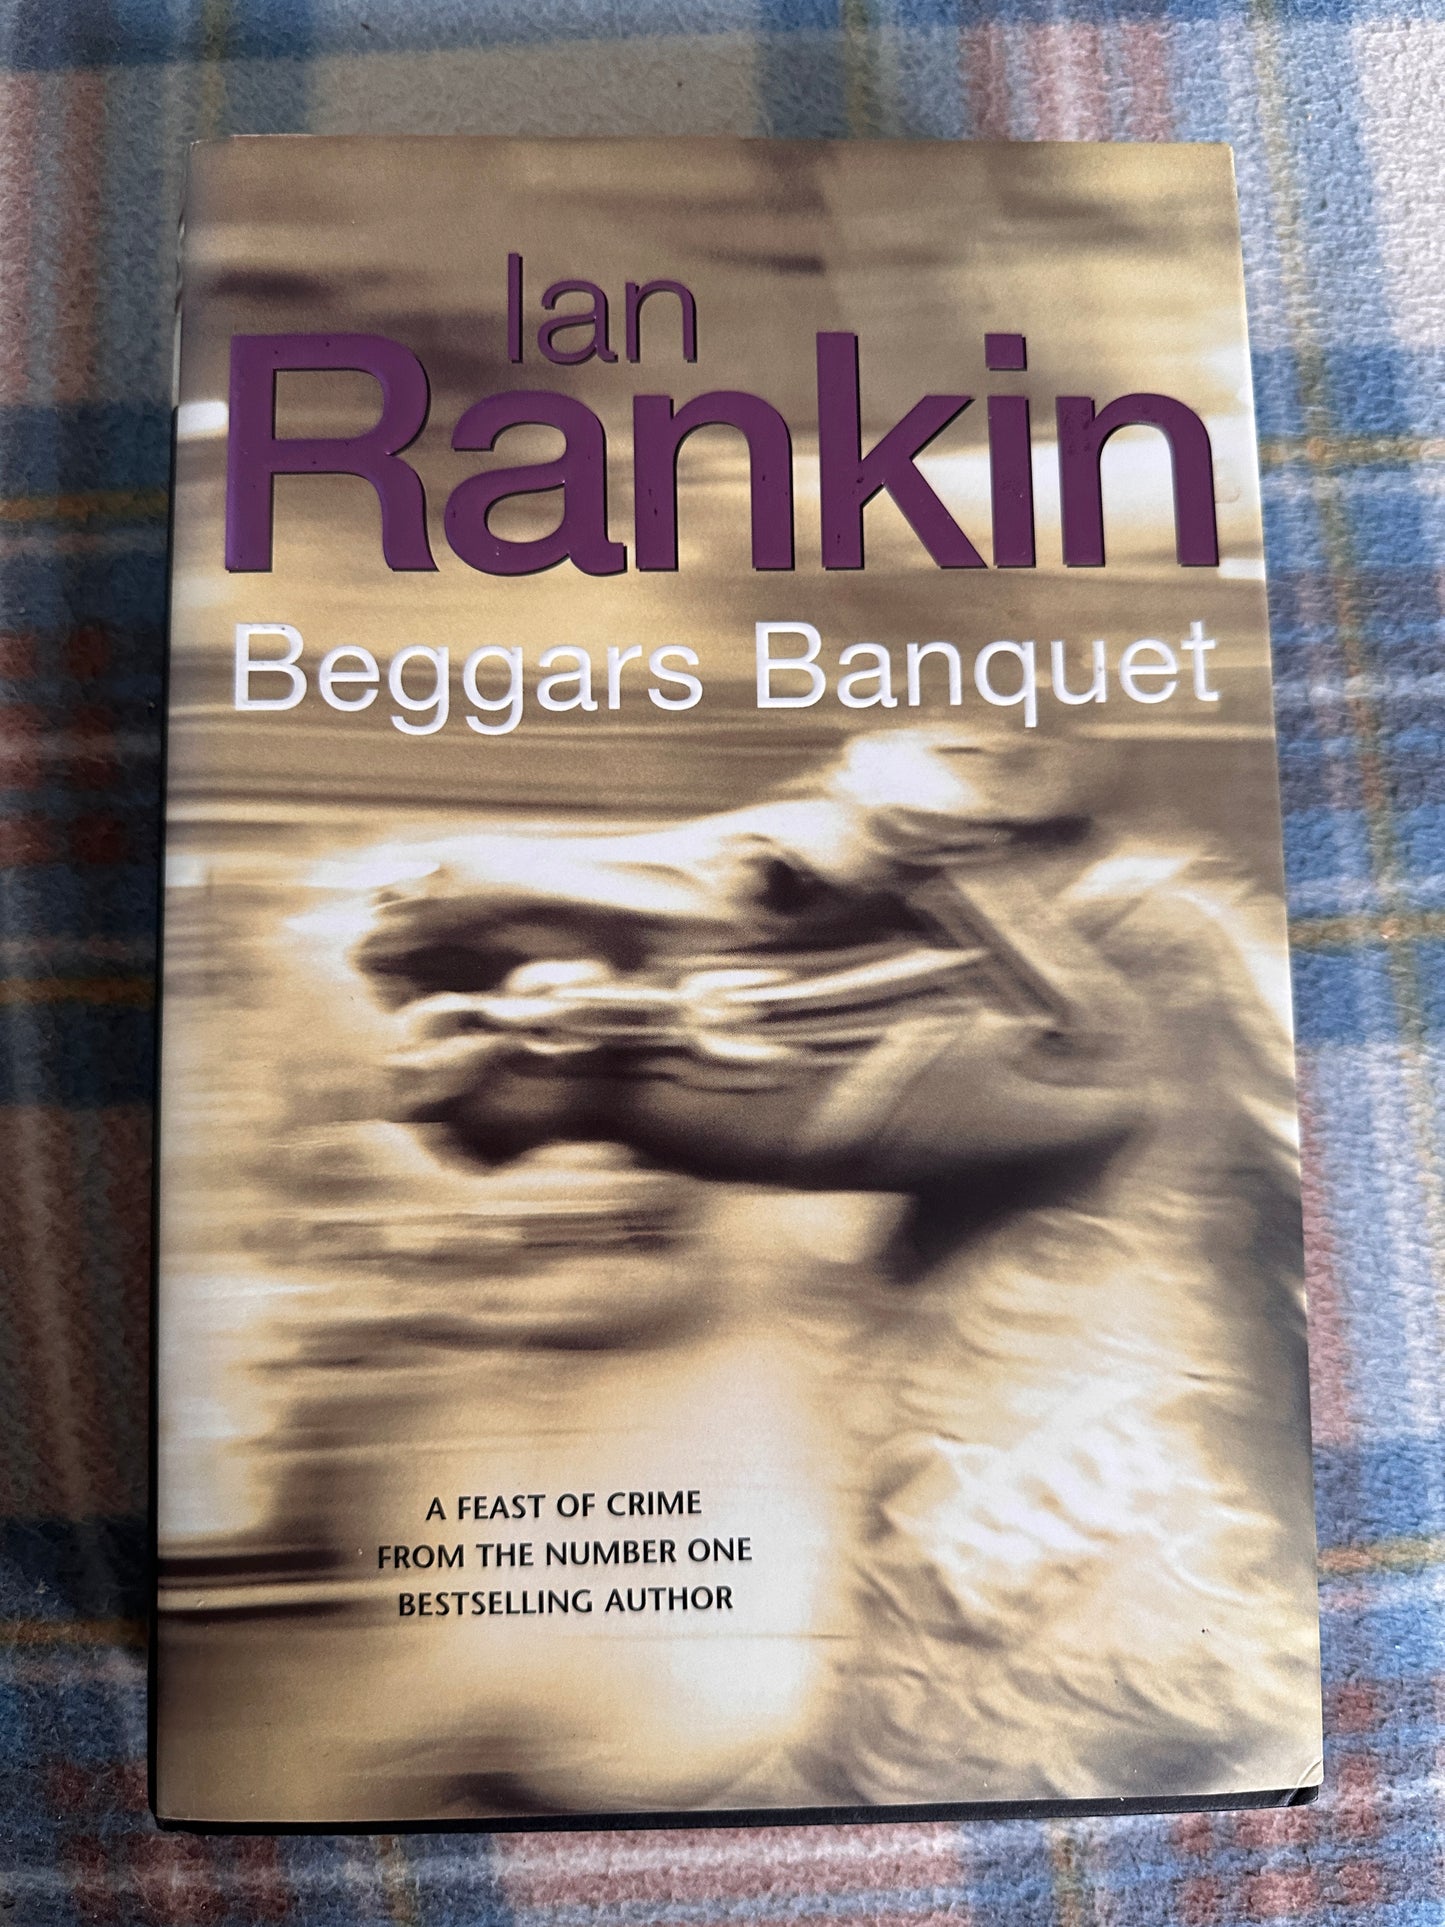 2002 Beggars Banquet - Ian Rankin(Orion)